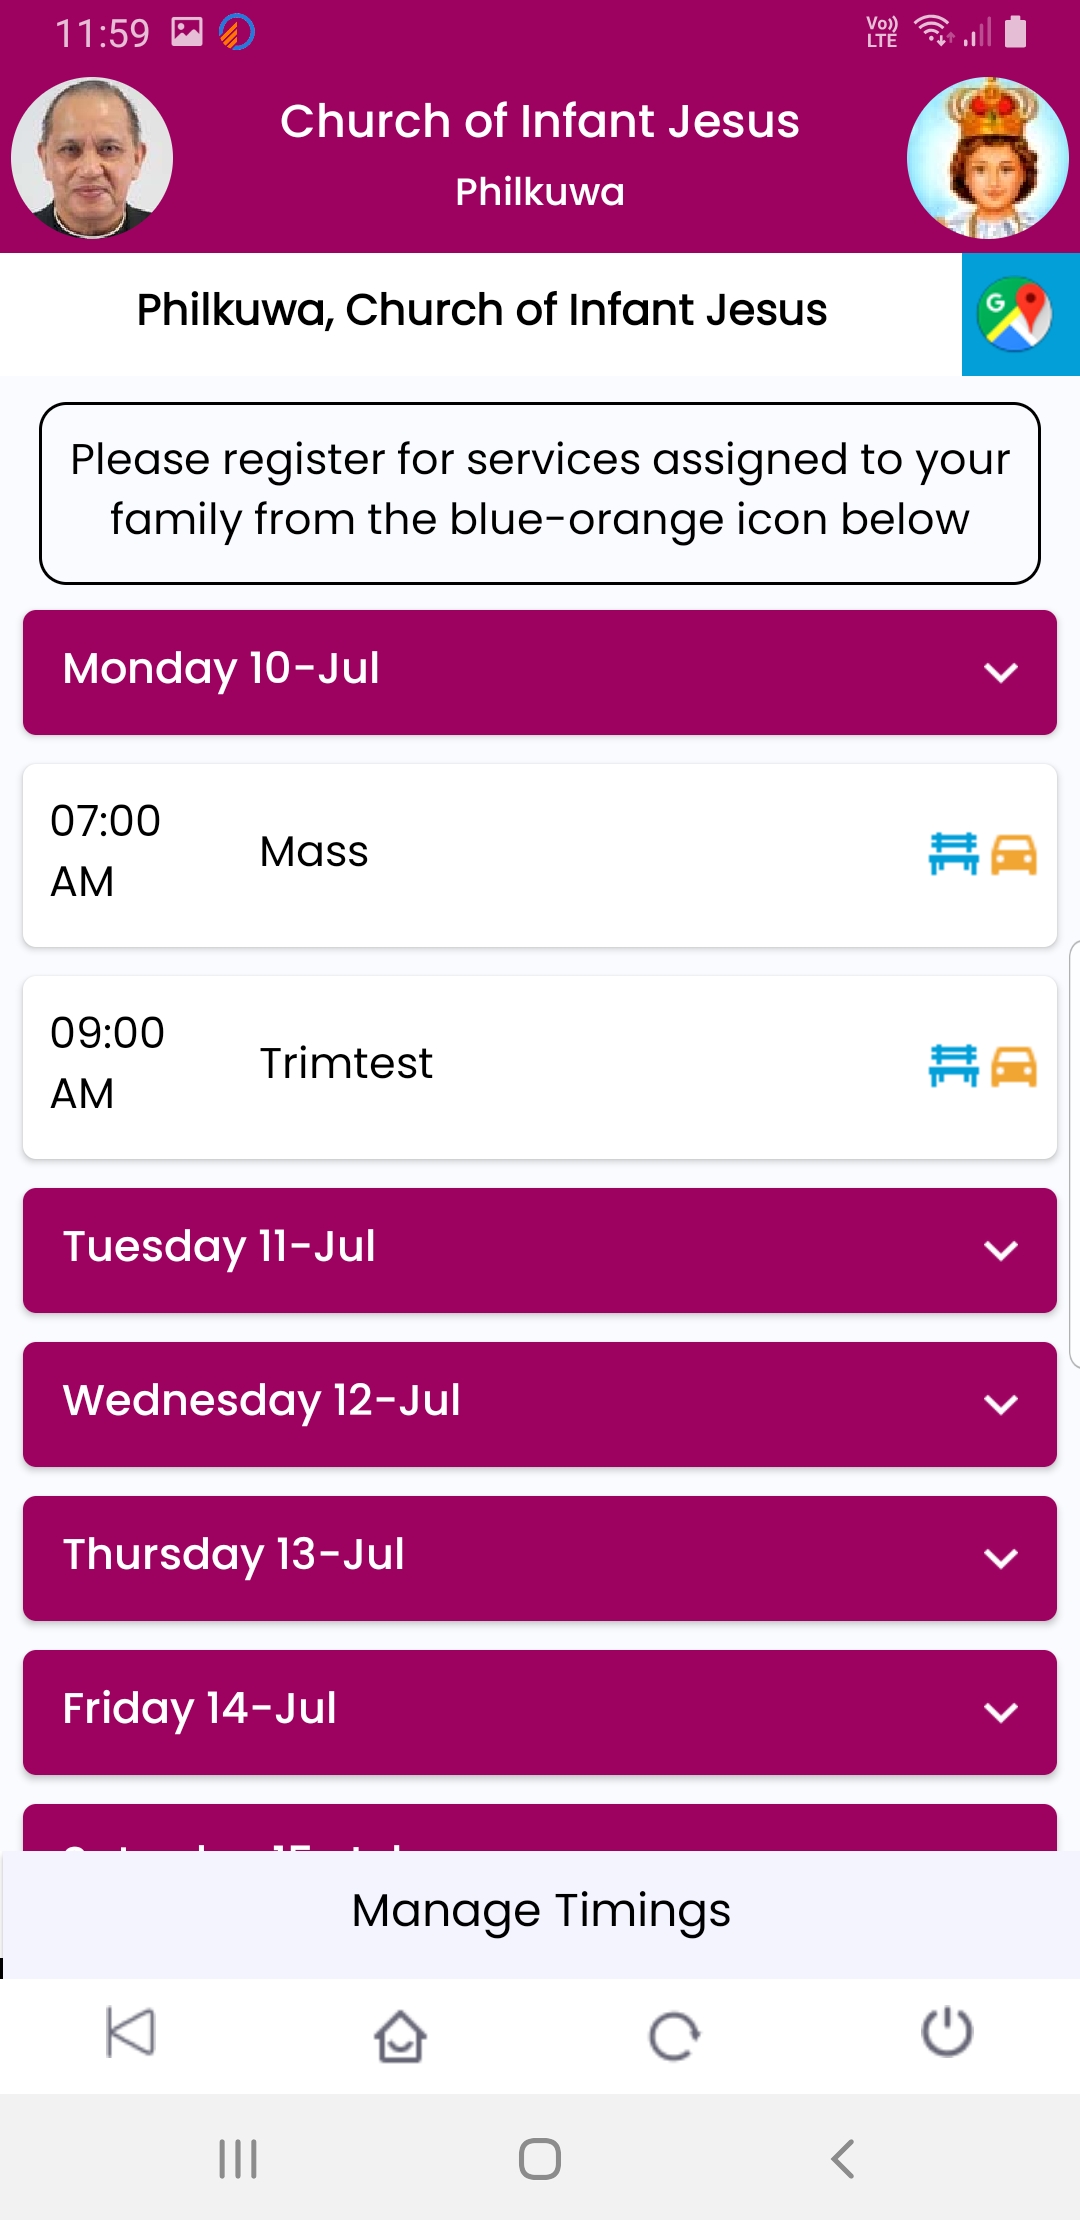 Parish mobile app with priest listing